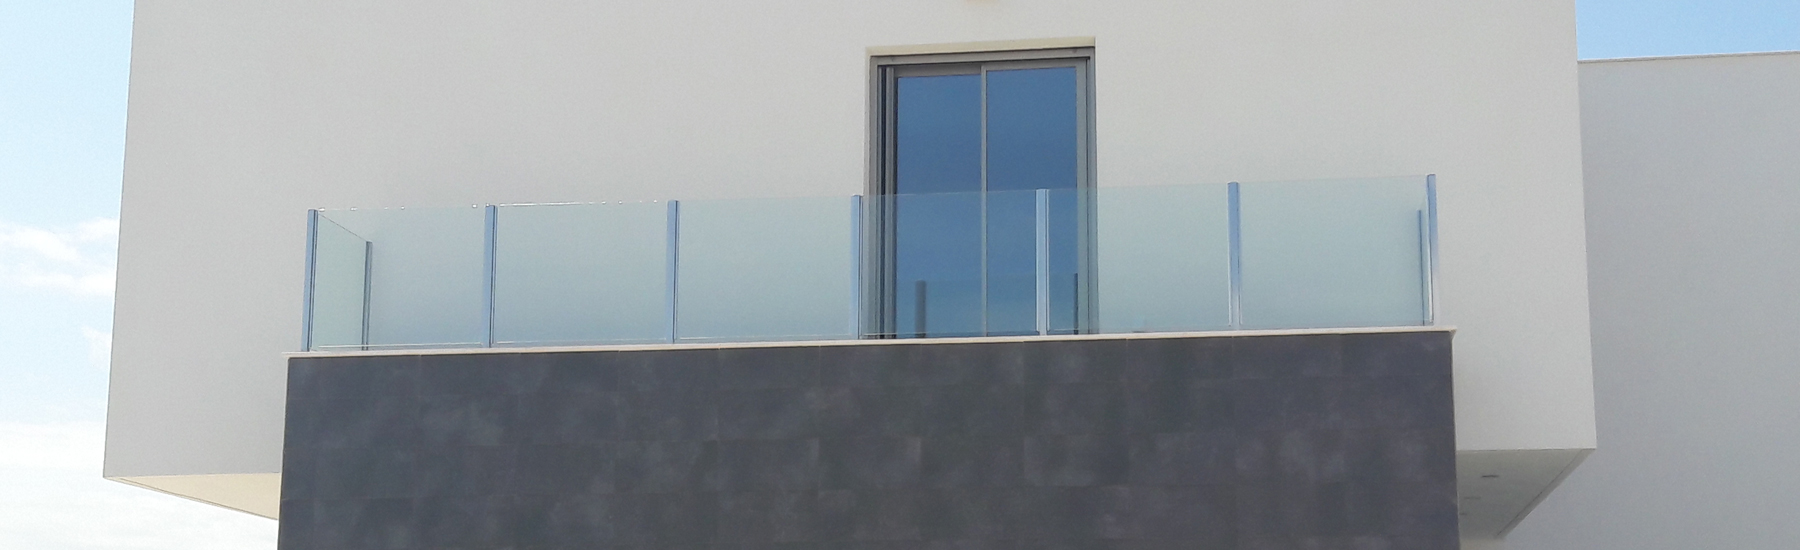 Barandilla perimetral de vidrio y puerta de acceso a terraza de aluminio Technal serie Soleal